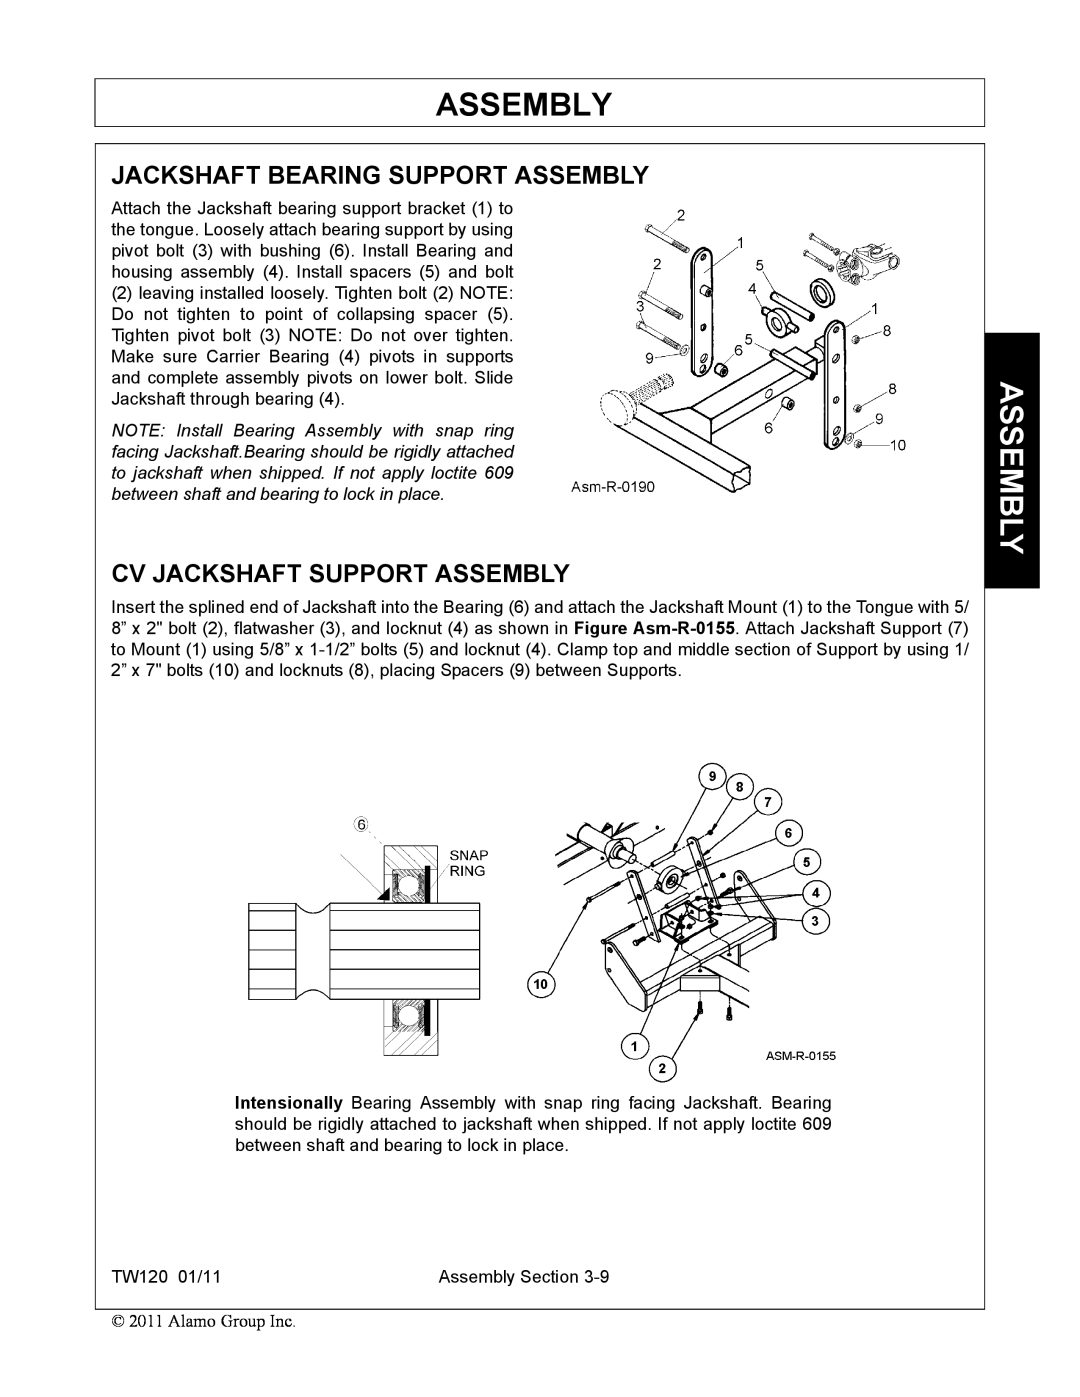 Blue Rhino FC-0025, FC-0024 manual Jackshaft Bearing Support Assembly, Cv Jackshaft Support Assembly 